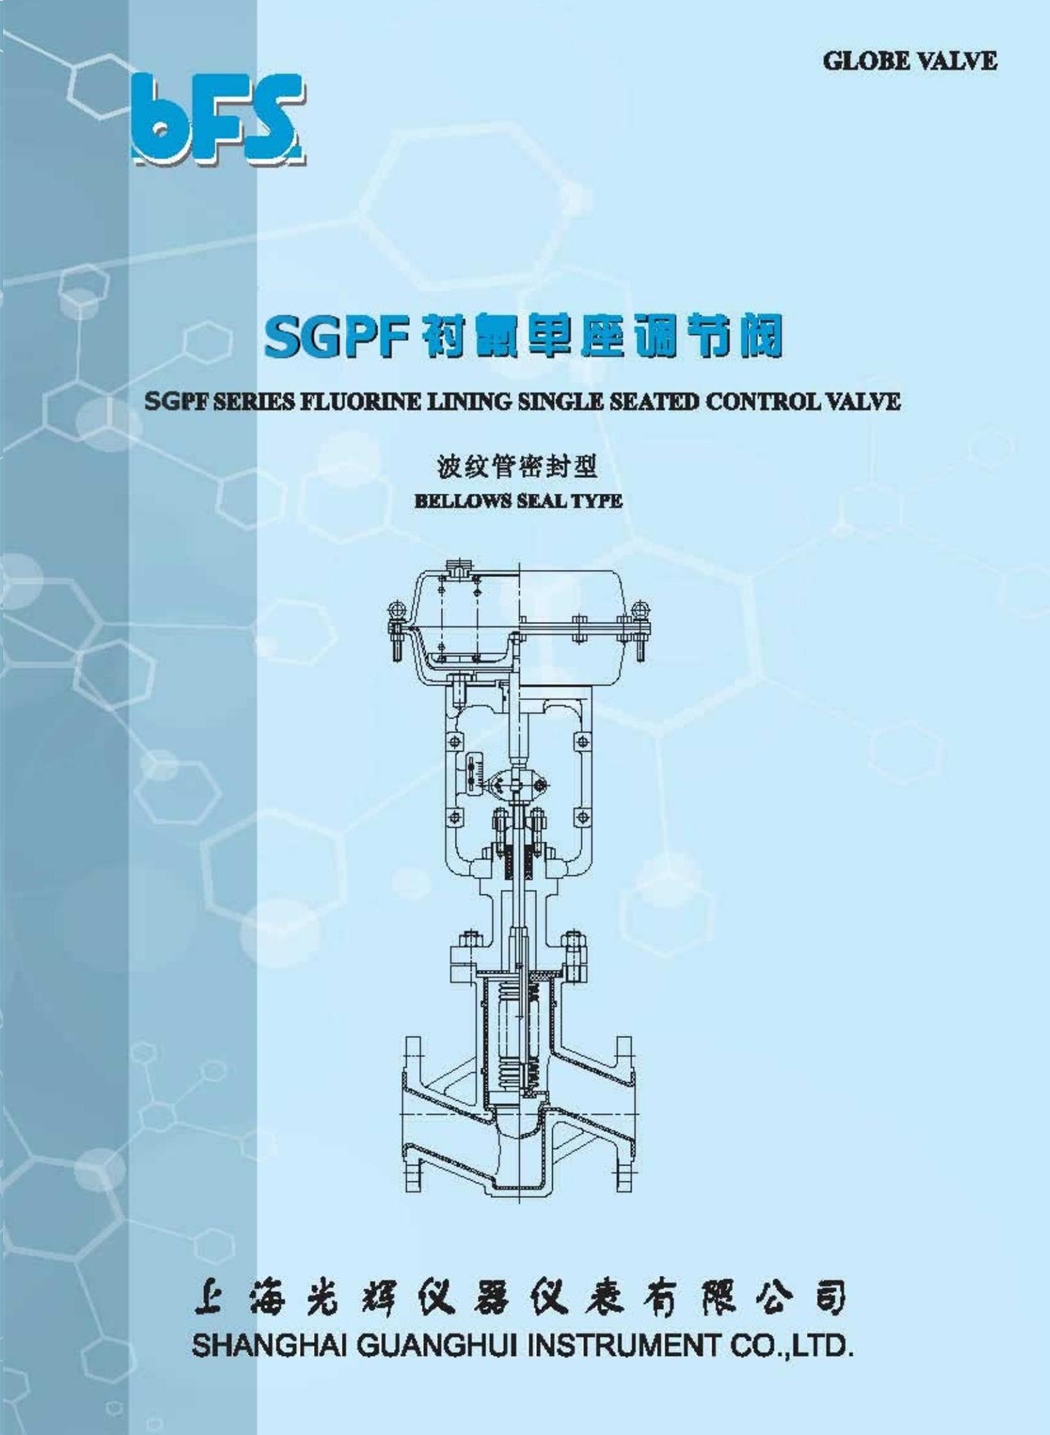  SGPF Series Fluorine Lining Single Seated Control Valve